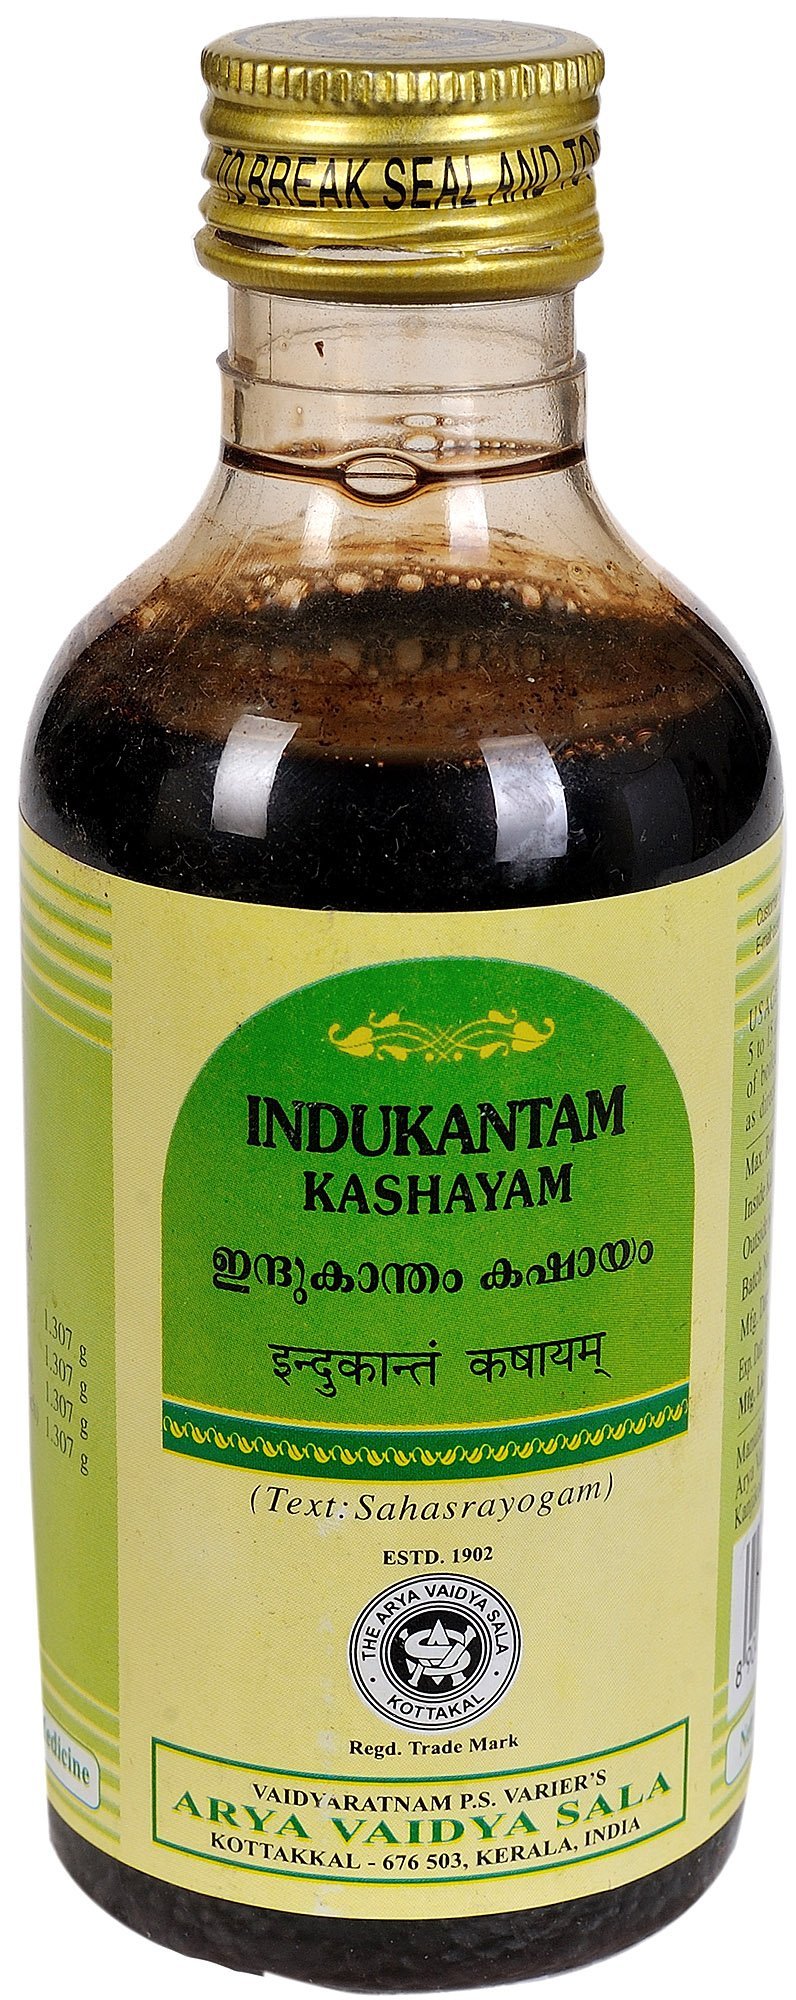 Indukantam Kashayam - book cover